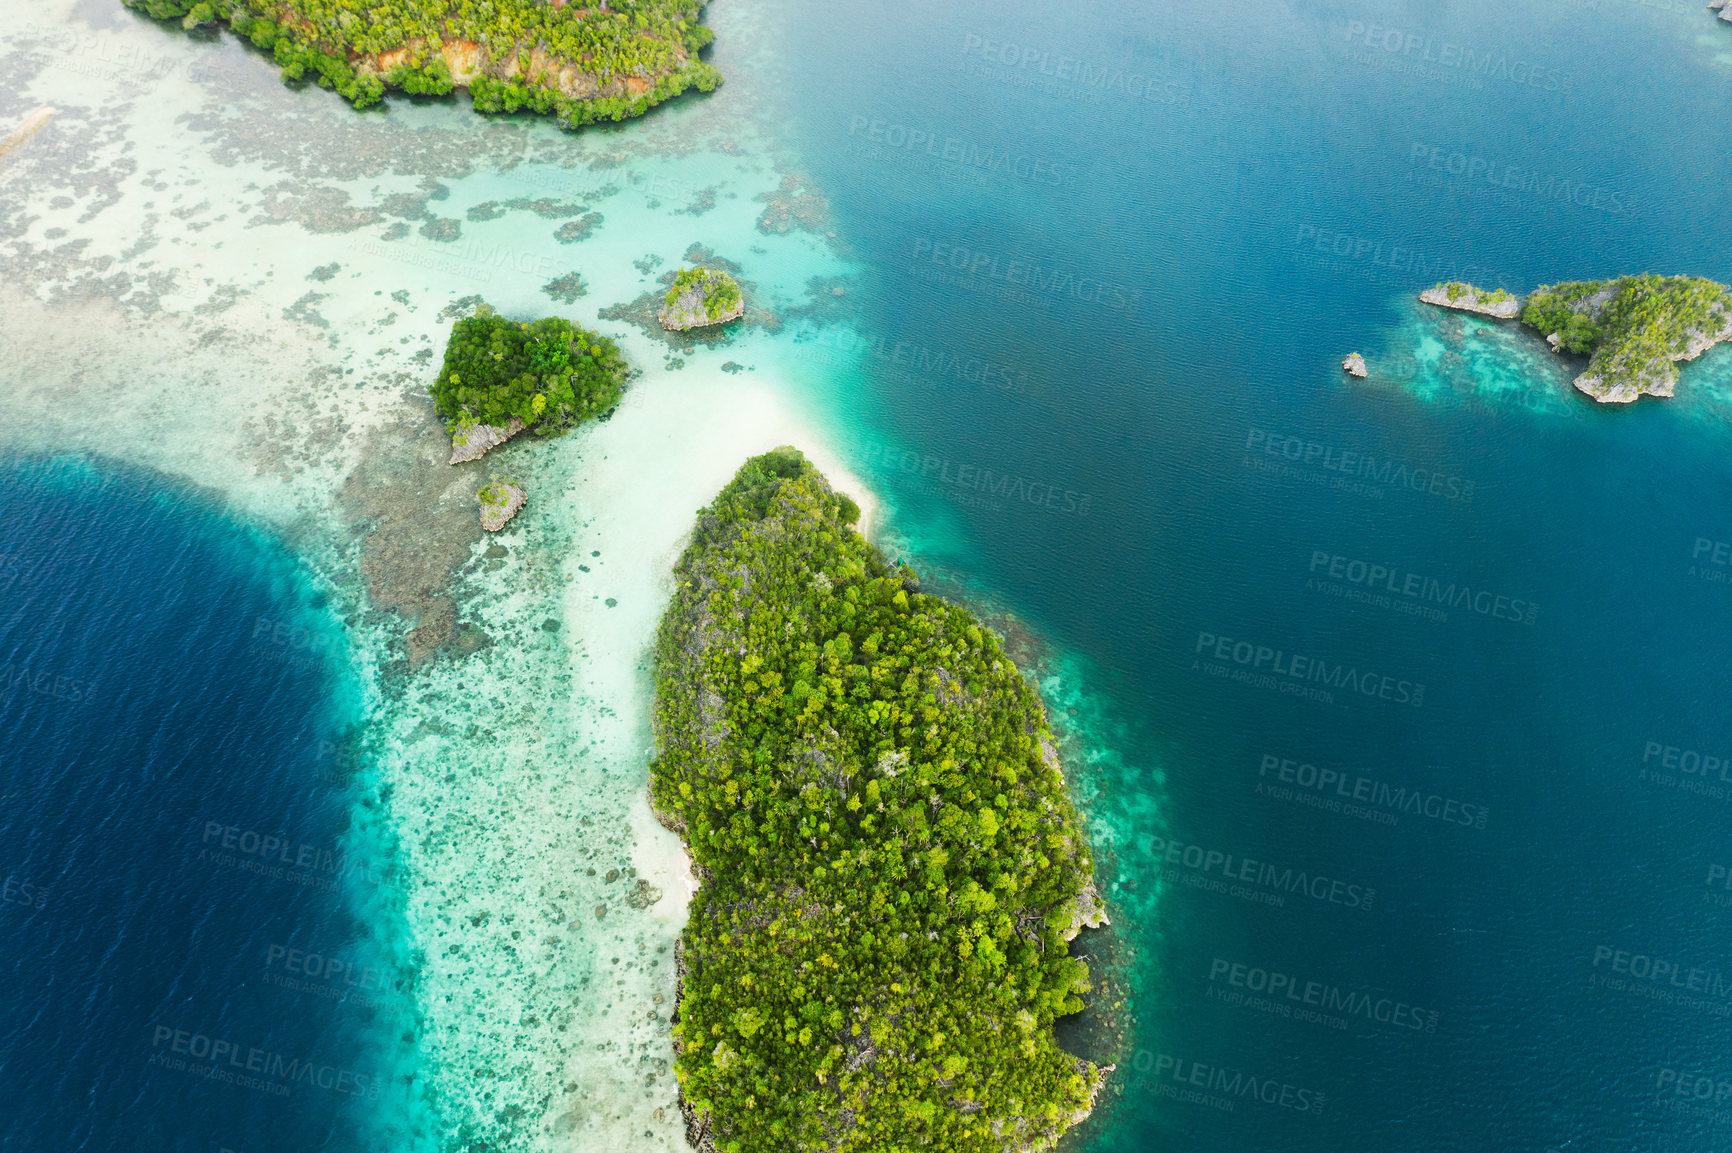 Buy stock photo High angle shot of the wonderful Raja Ampat Islands in Indonesia